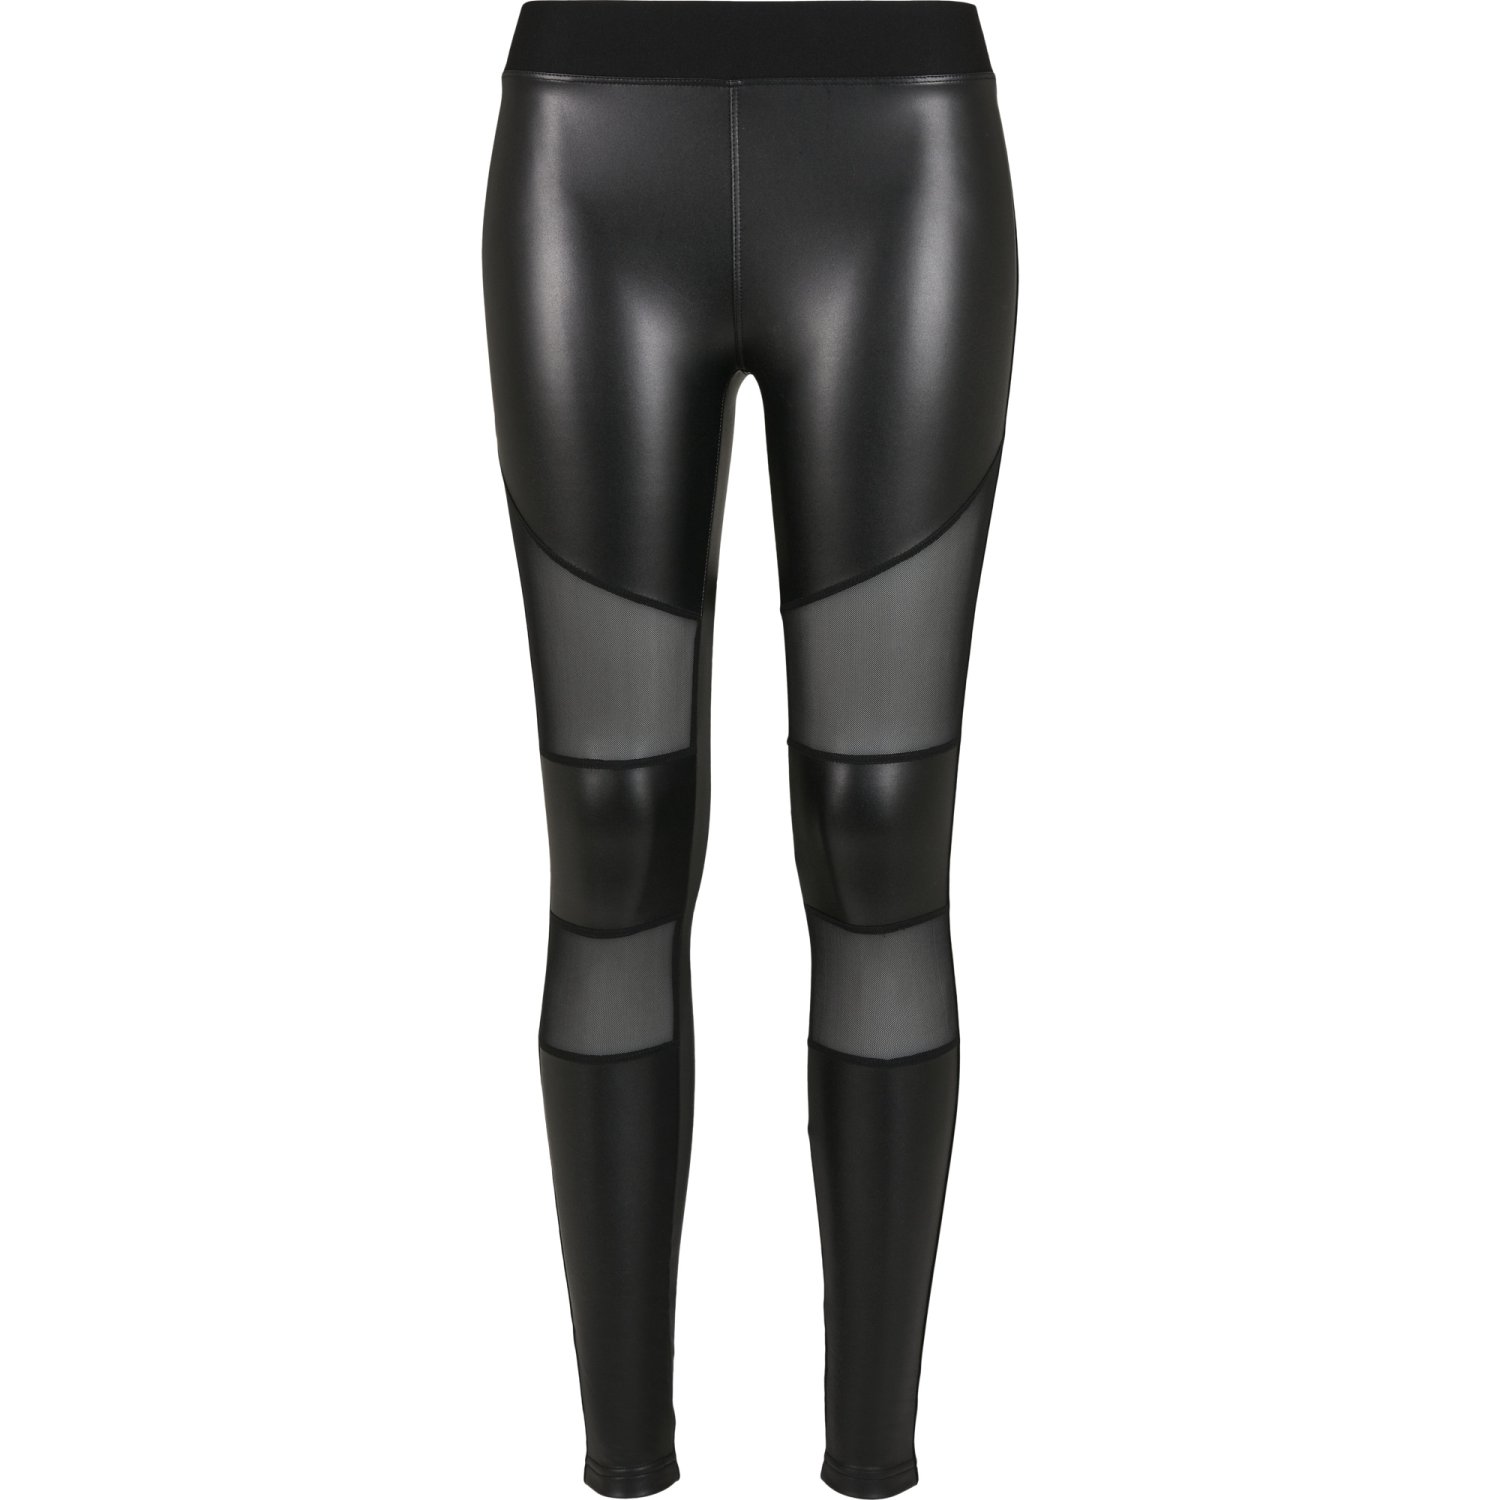 Urban Classics Ladies - | Leggings STREET Leggings Pants | WOMEN | URBAN | EN MESH Faux Leather TECH